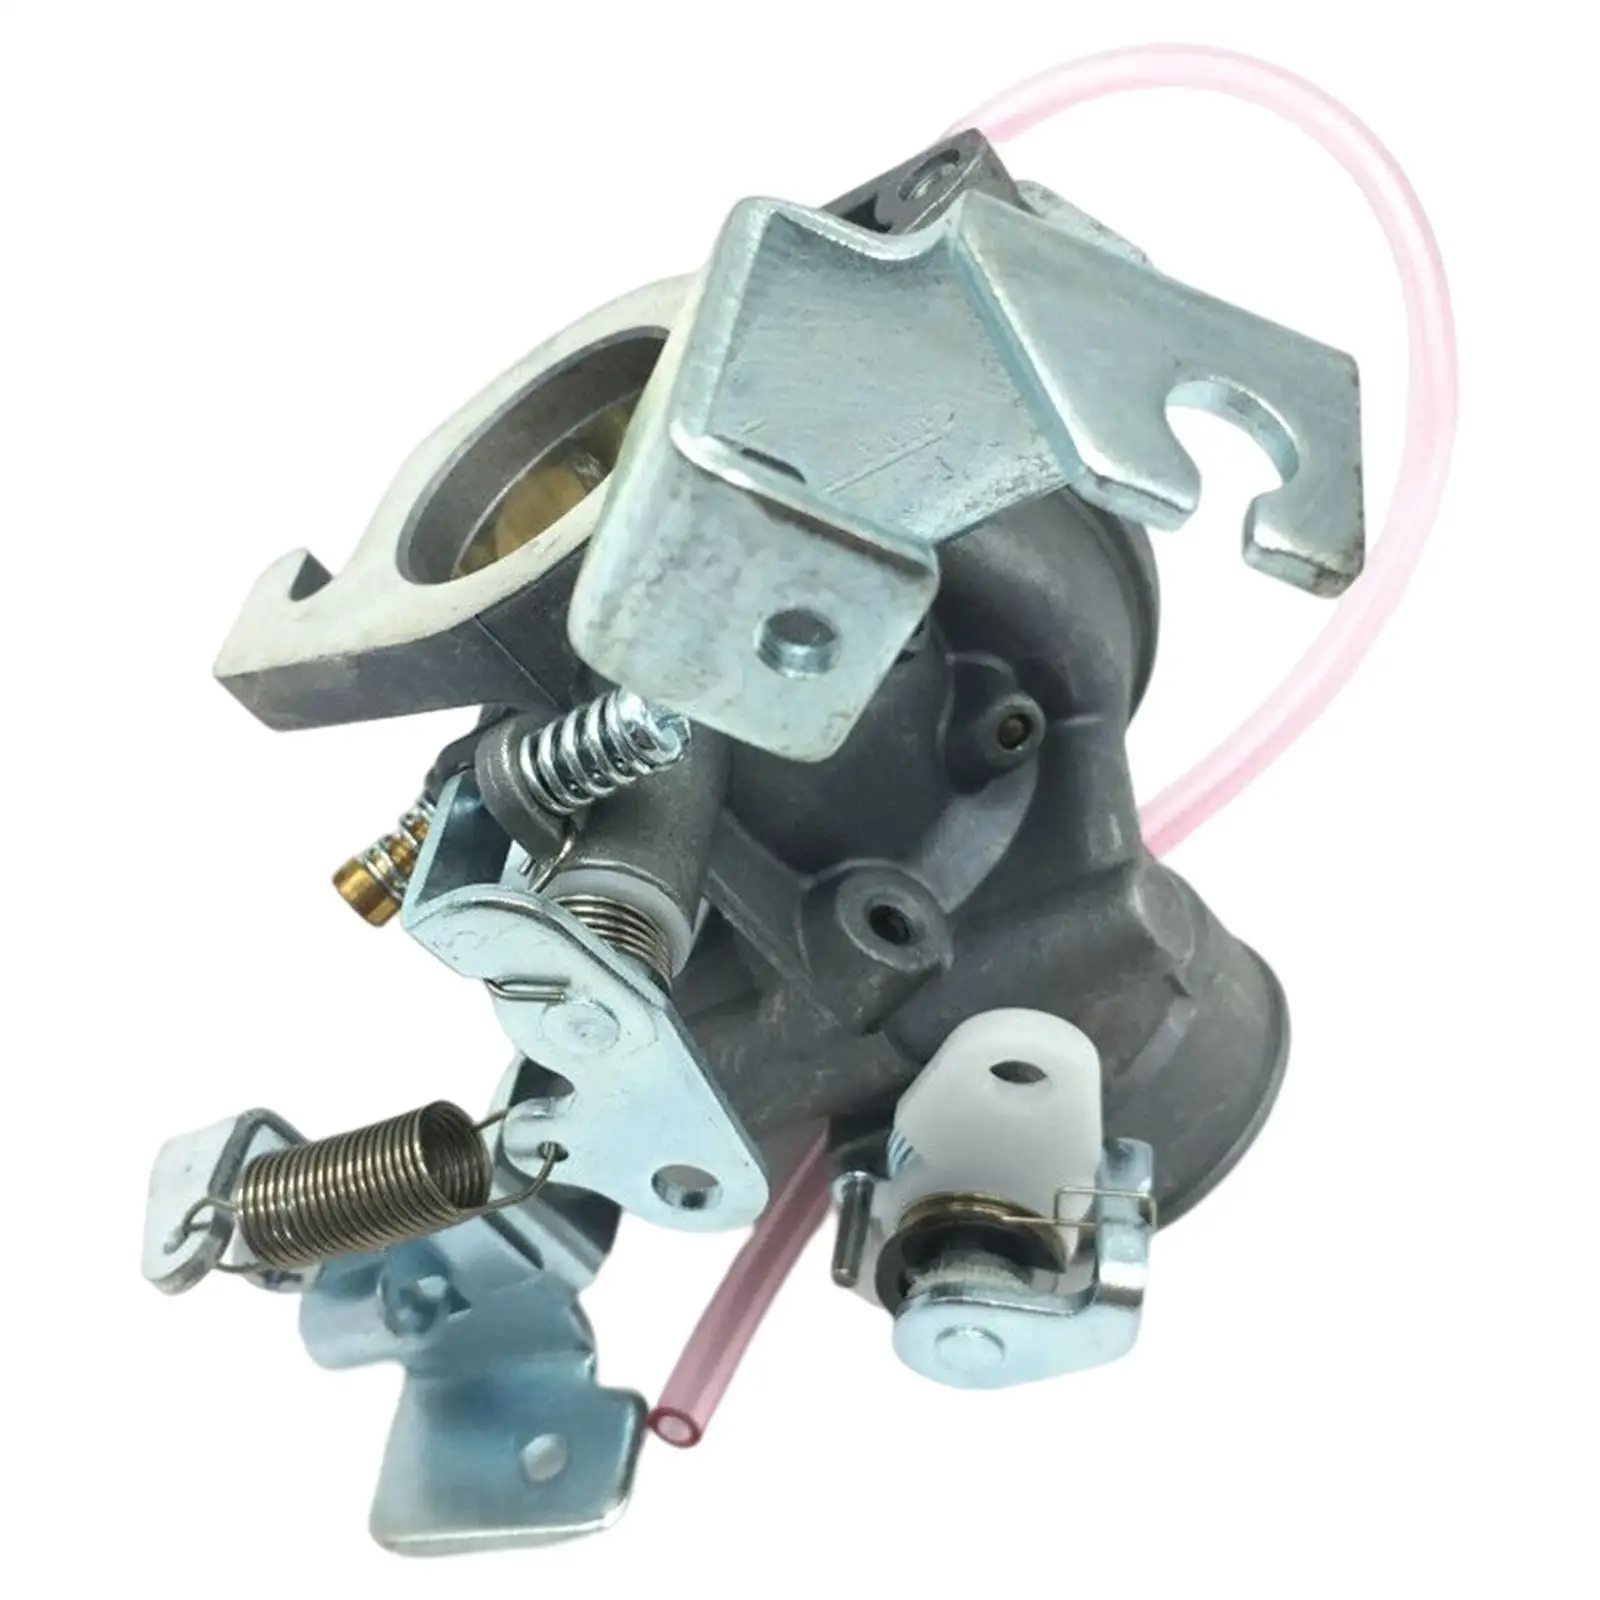 Automotive Carburetor J38-14101-00 Fit for Yamaha G2 4 Cycle Stroke Engine